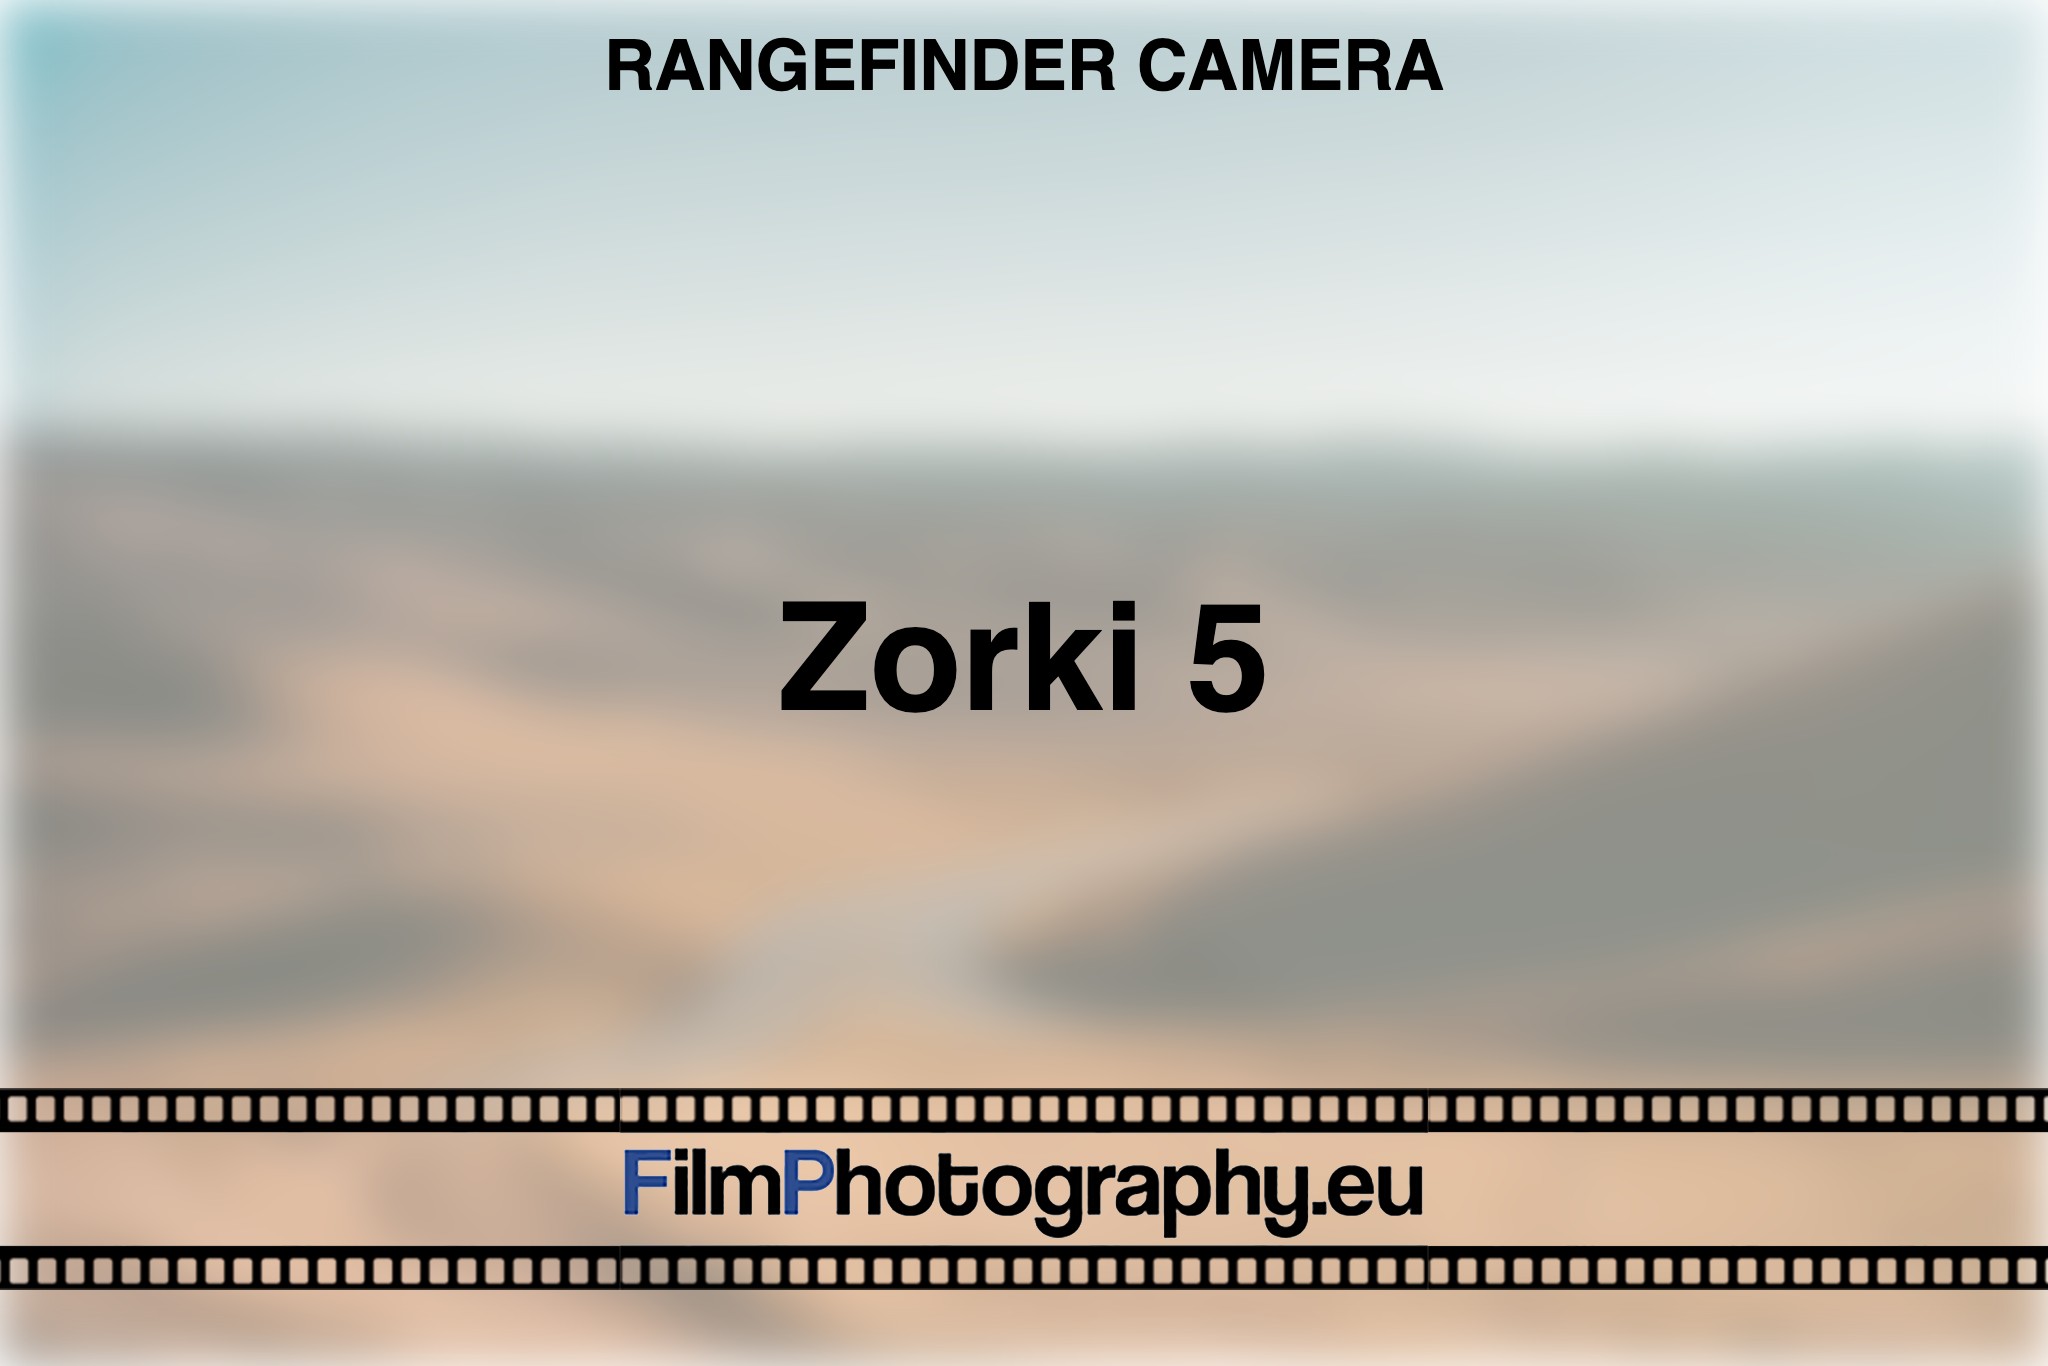 zorki-5-rangefinder-camera-bnv